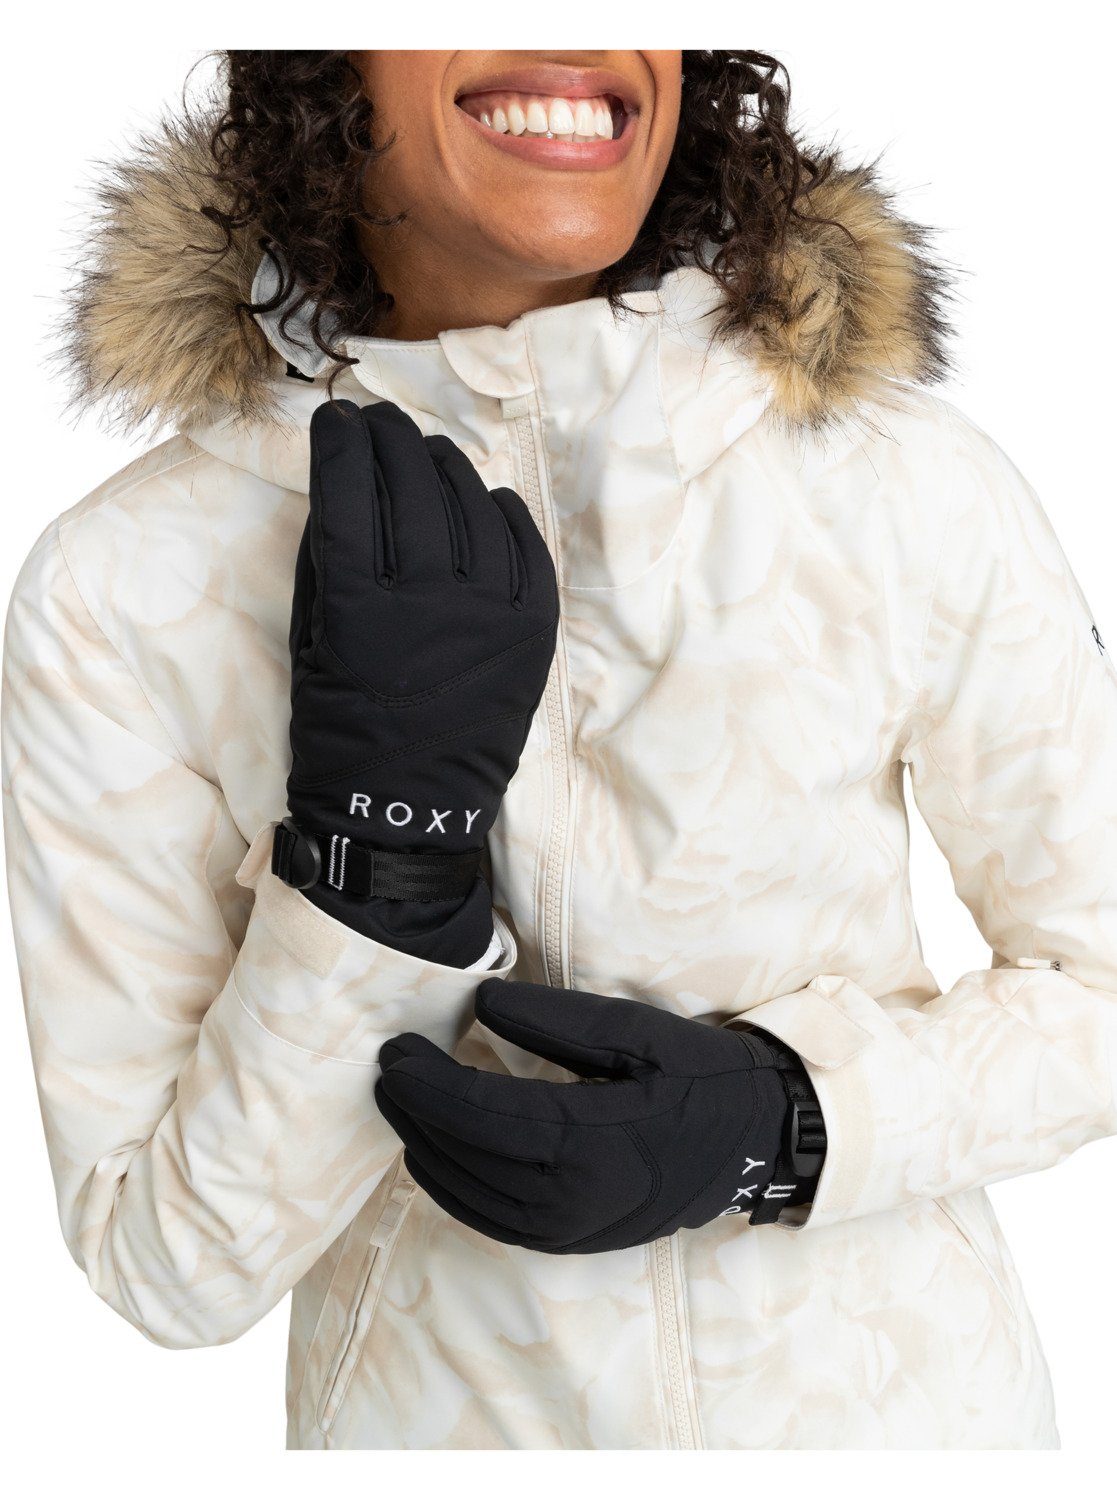 Jetty Snowboardhandschuhe Black True ROXY Roxy